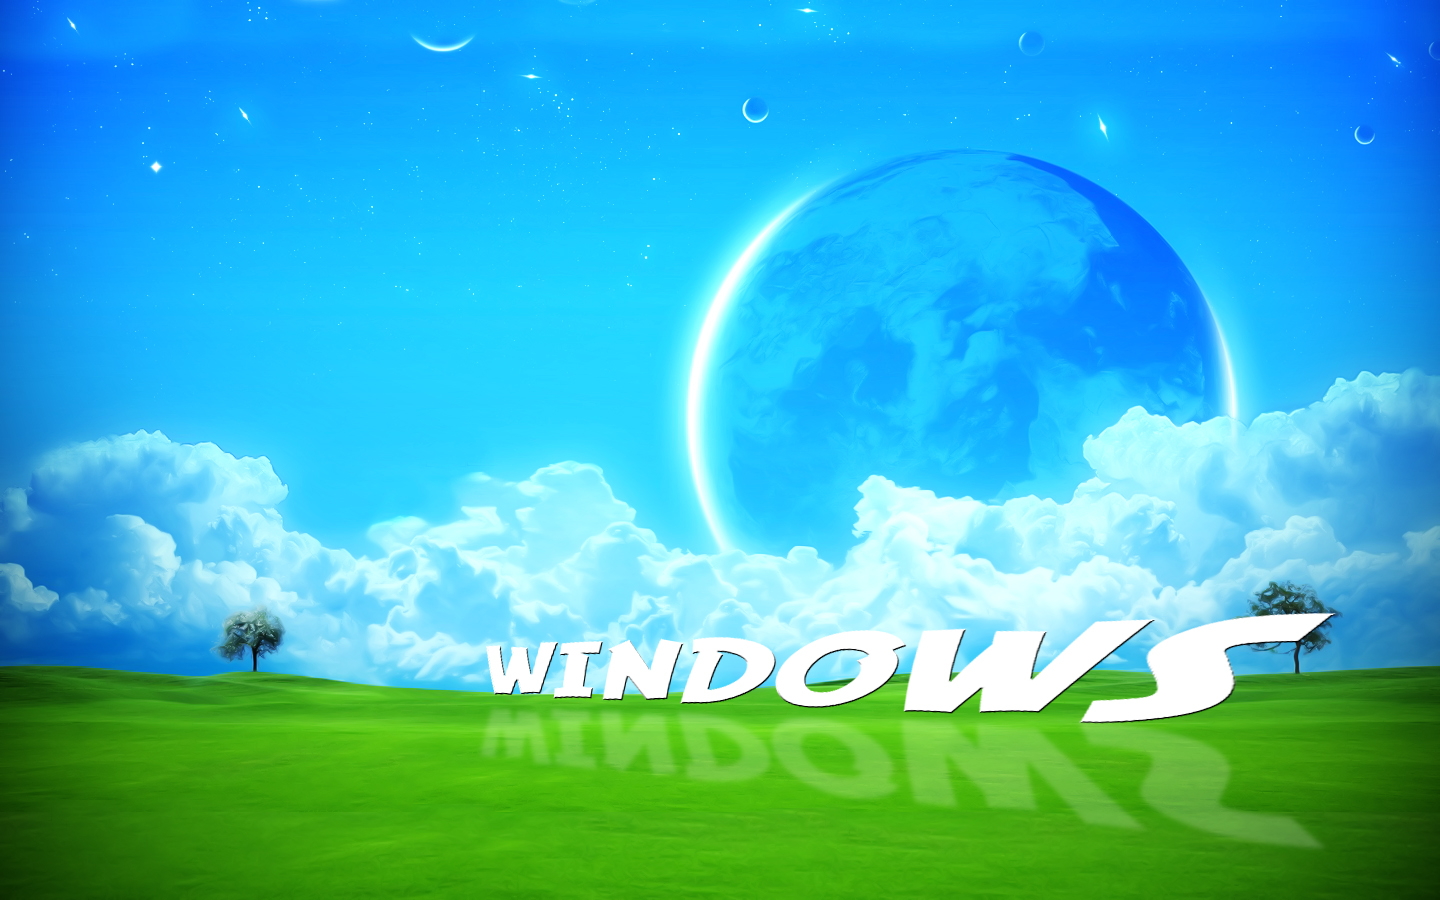 Animated Wallpaper Windows 7: Computer Wallpaper